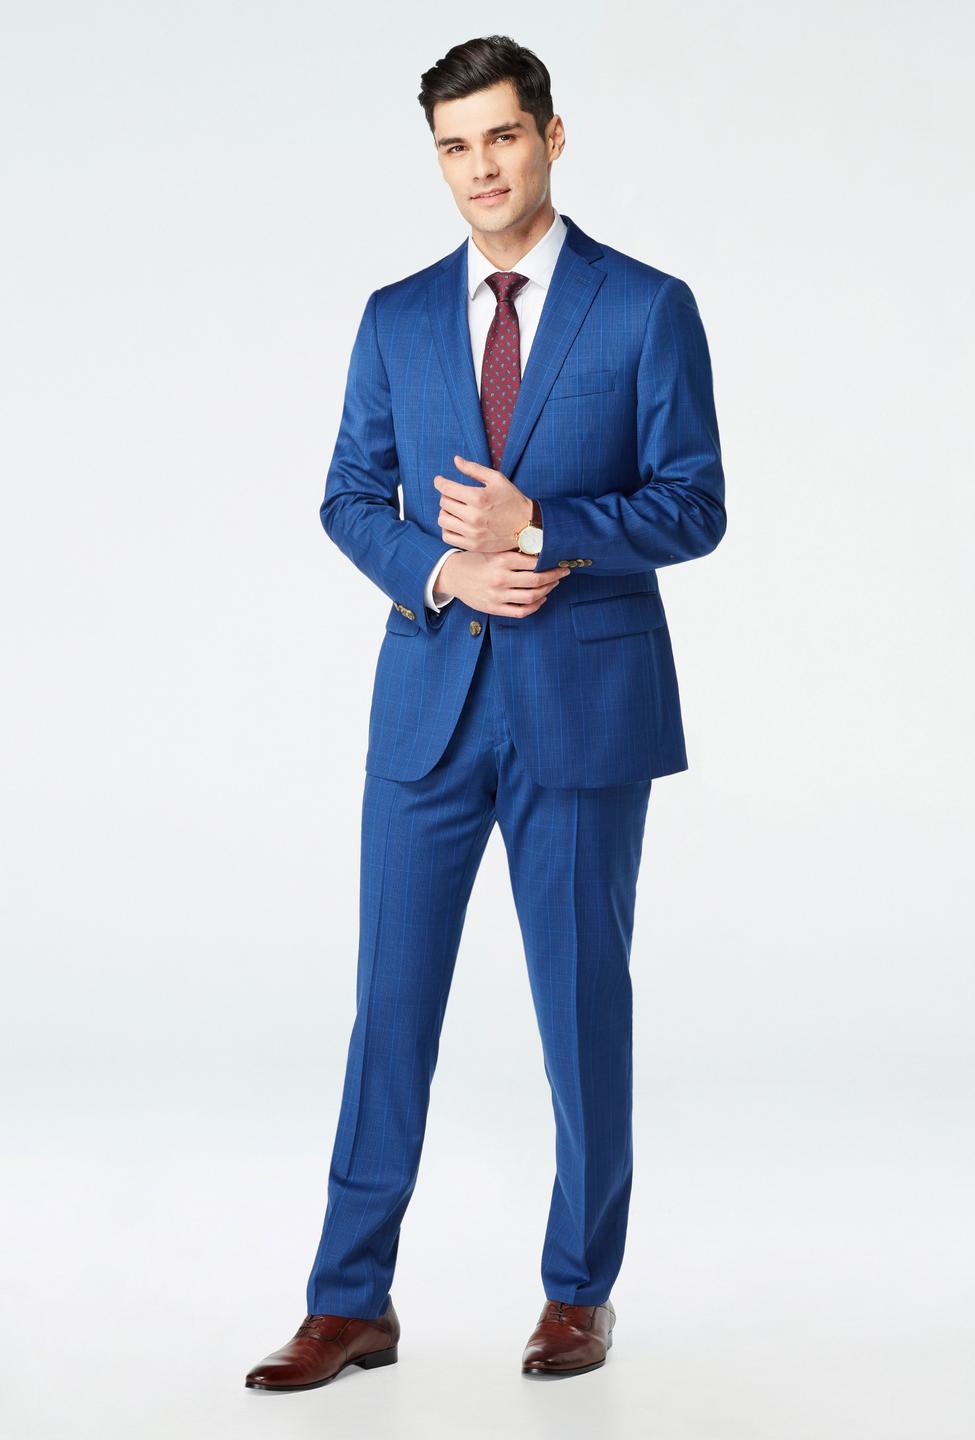 Blue suit - Hemsworth Plaid Design from Premium Indochino Collection